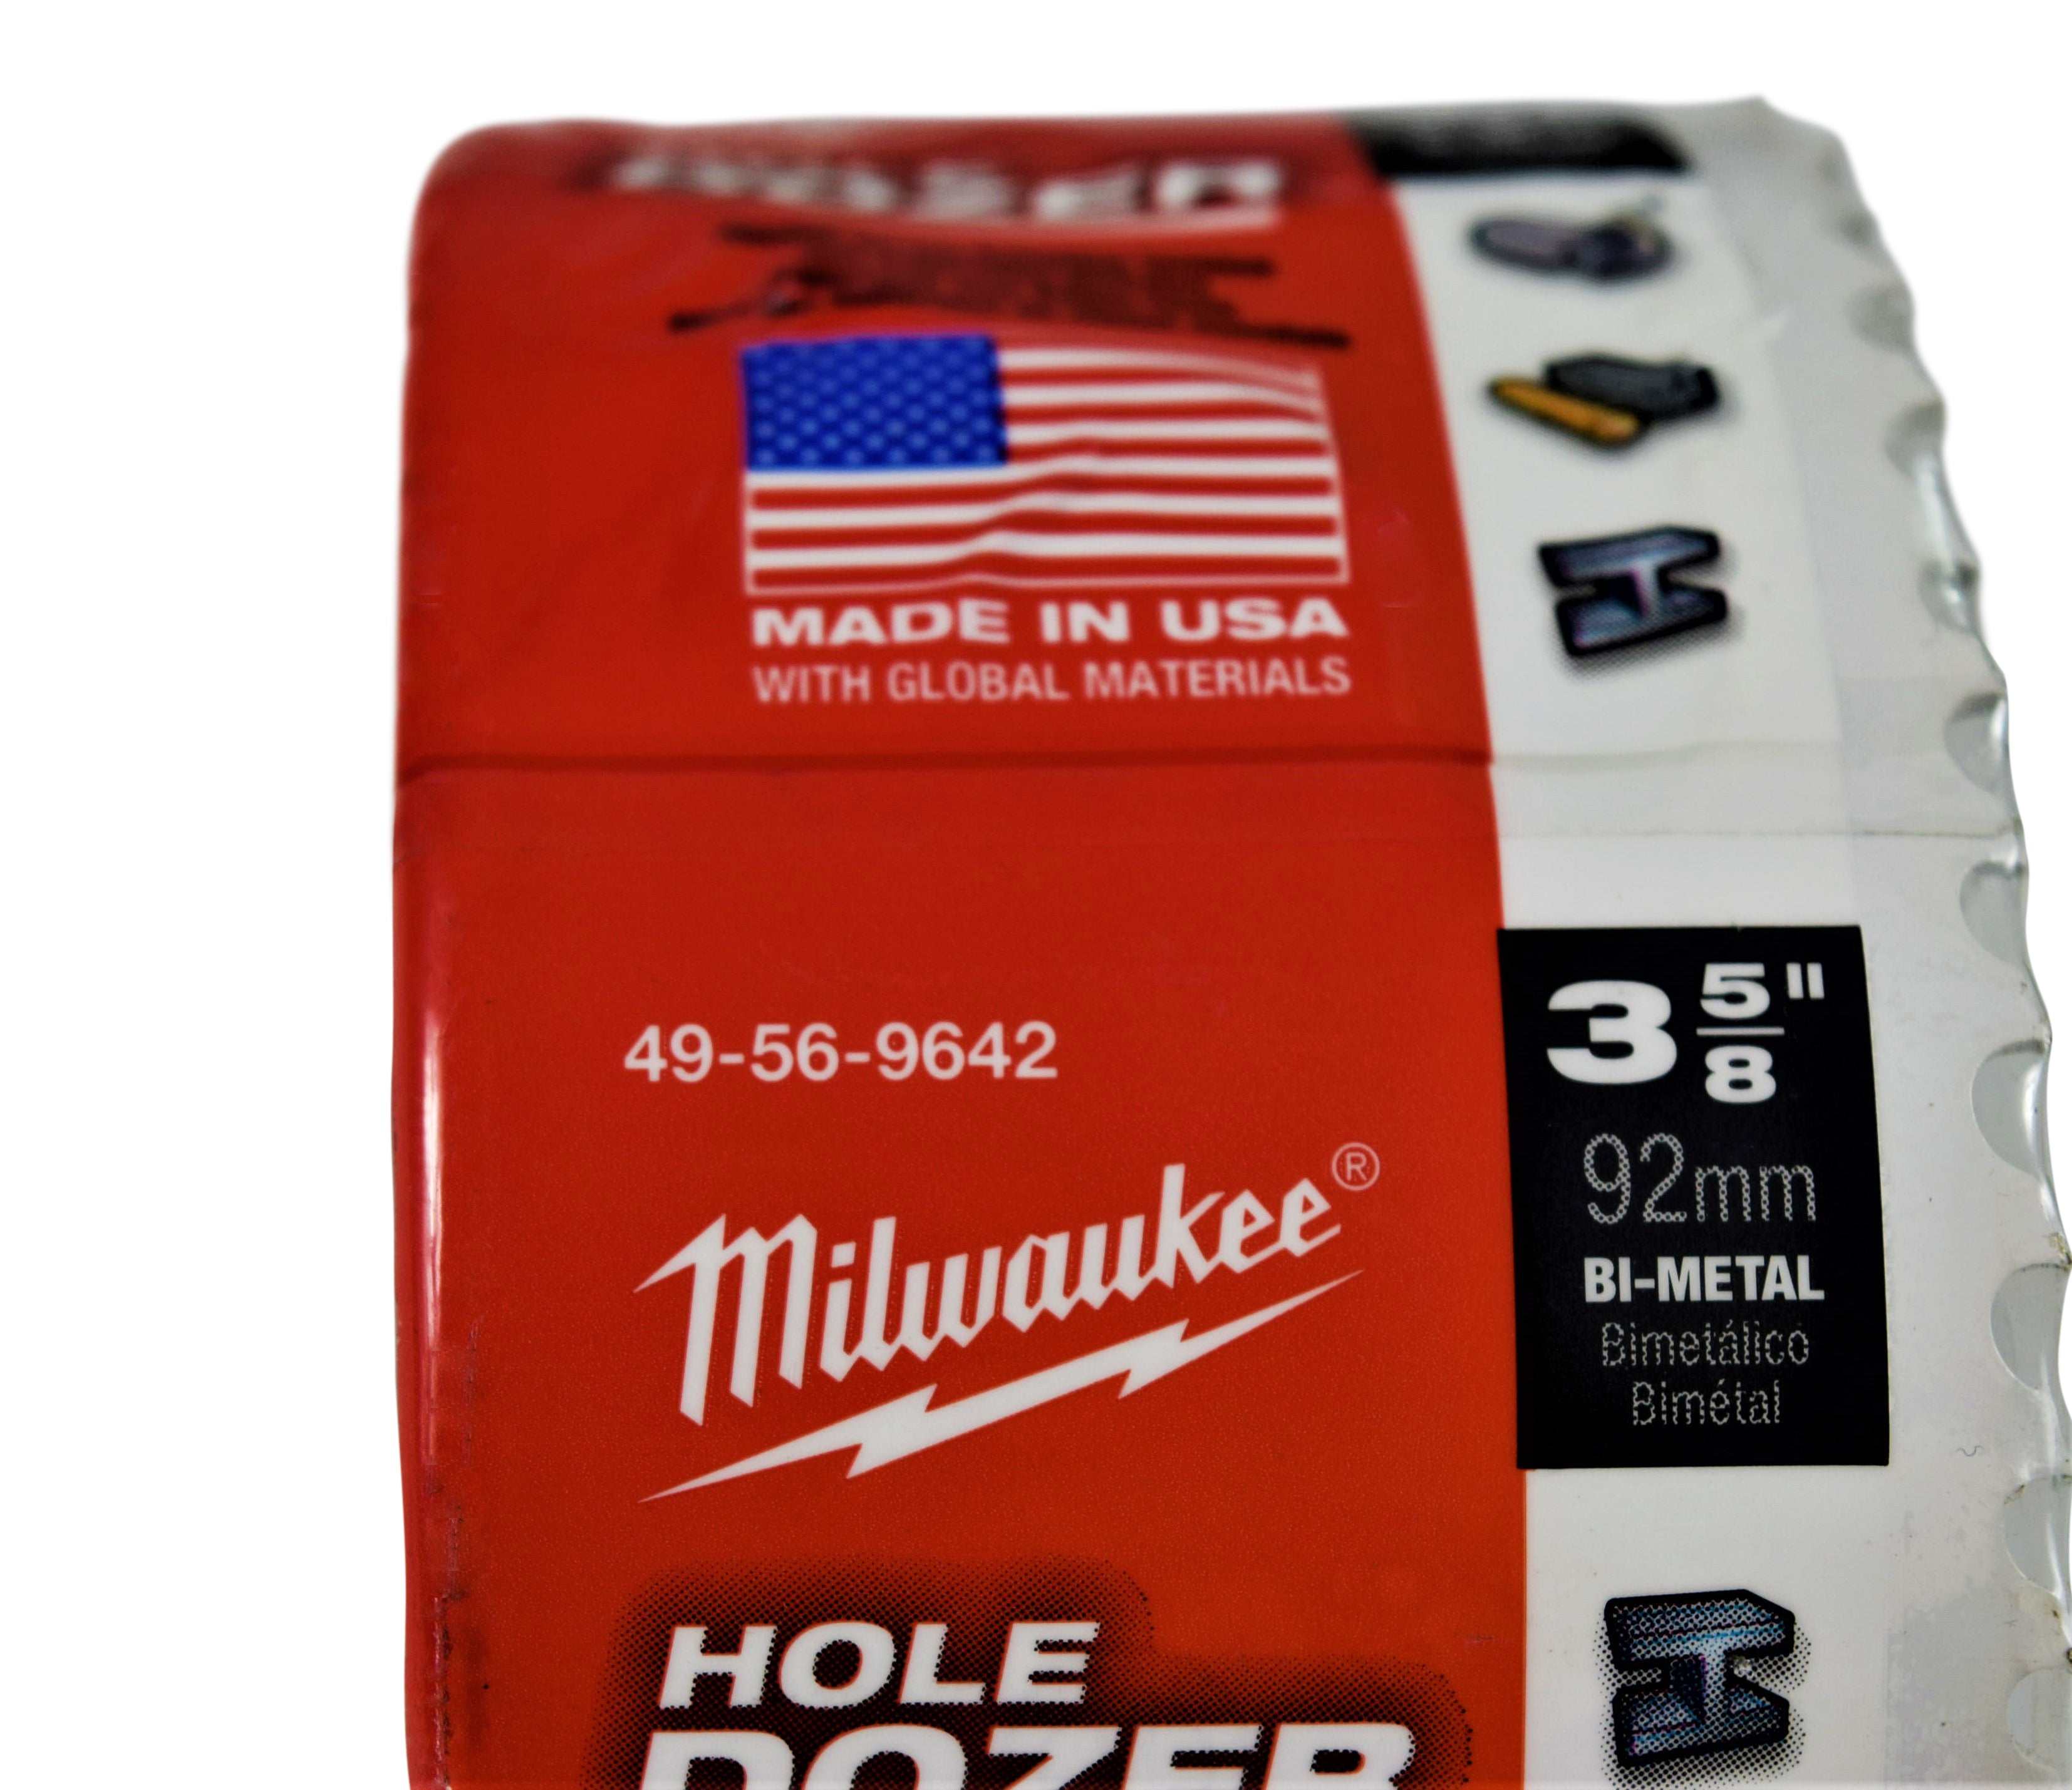 Milwaukee 49-56-9642 3-5/8-inch Hole Dozer Bi-Metal Multi-Purpose Hole Saw